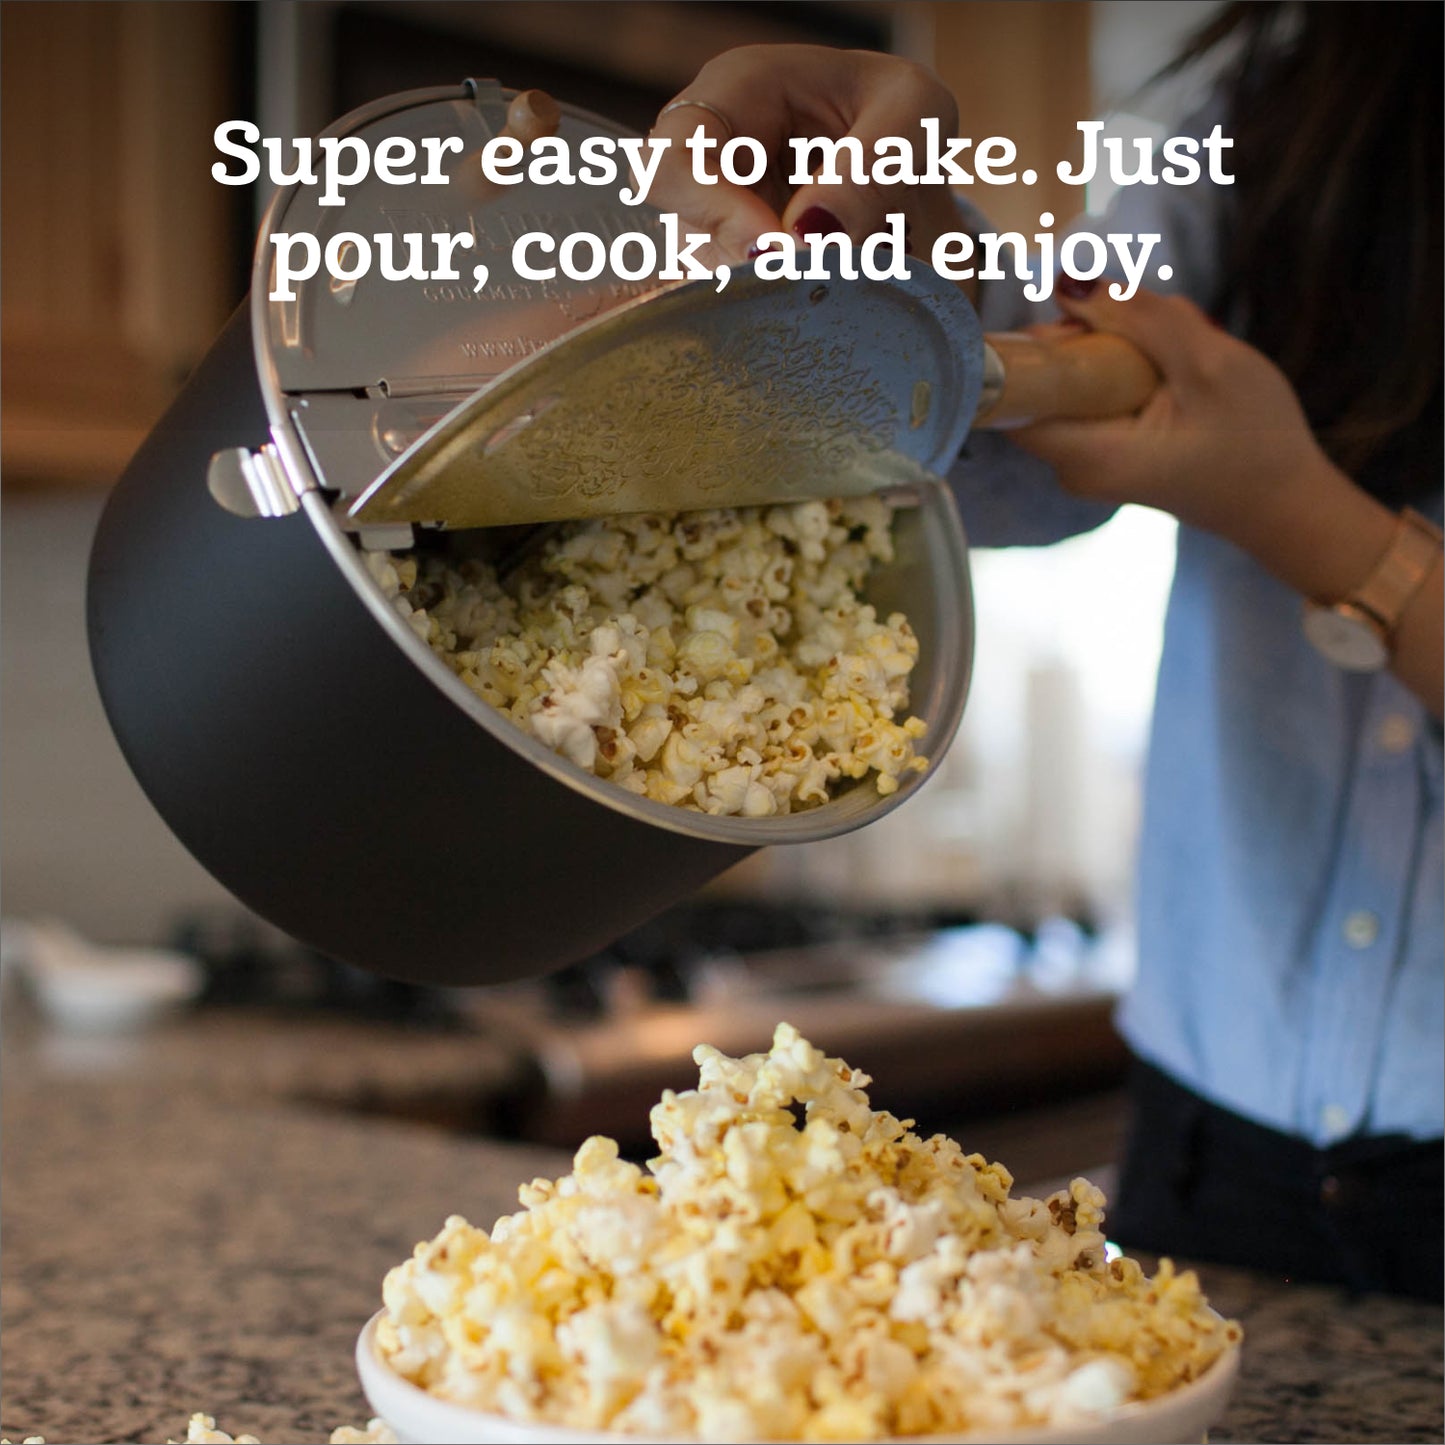 HIRIFULL Hot Air Popcorn Machine, Household Popcorn Maker for